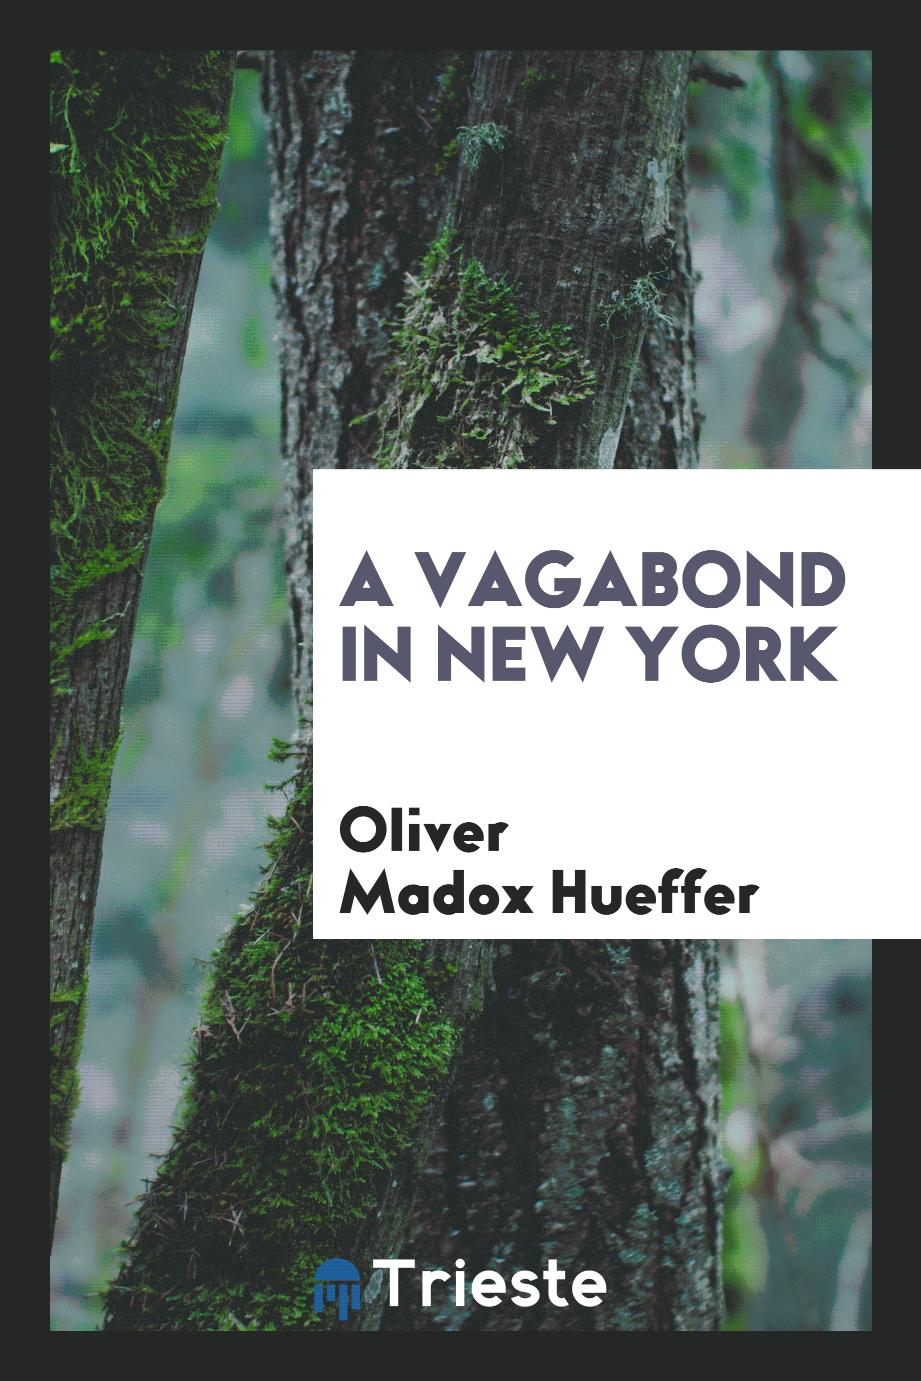 A vagabond in New York